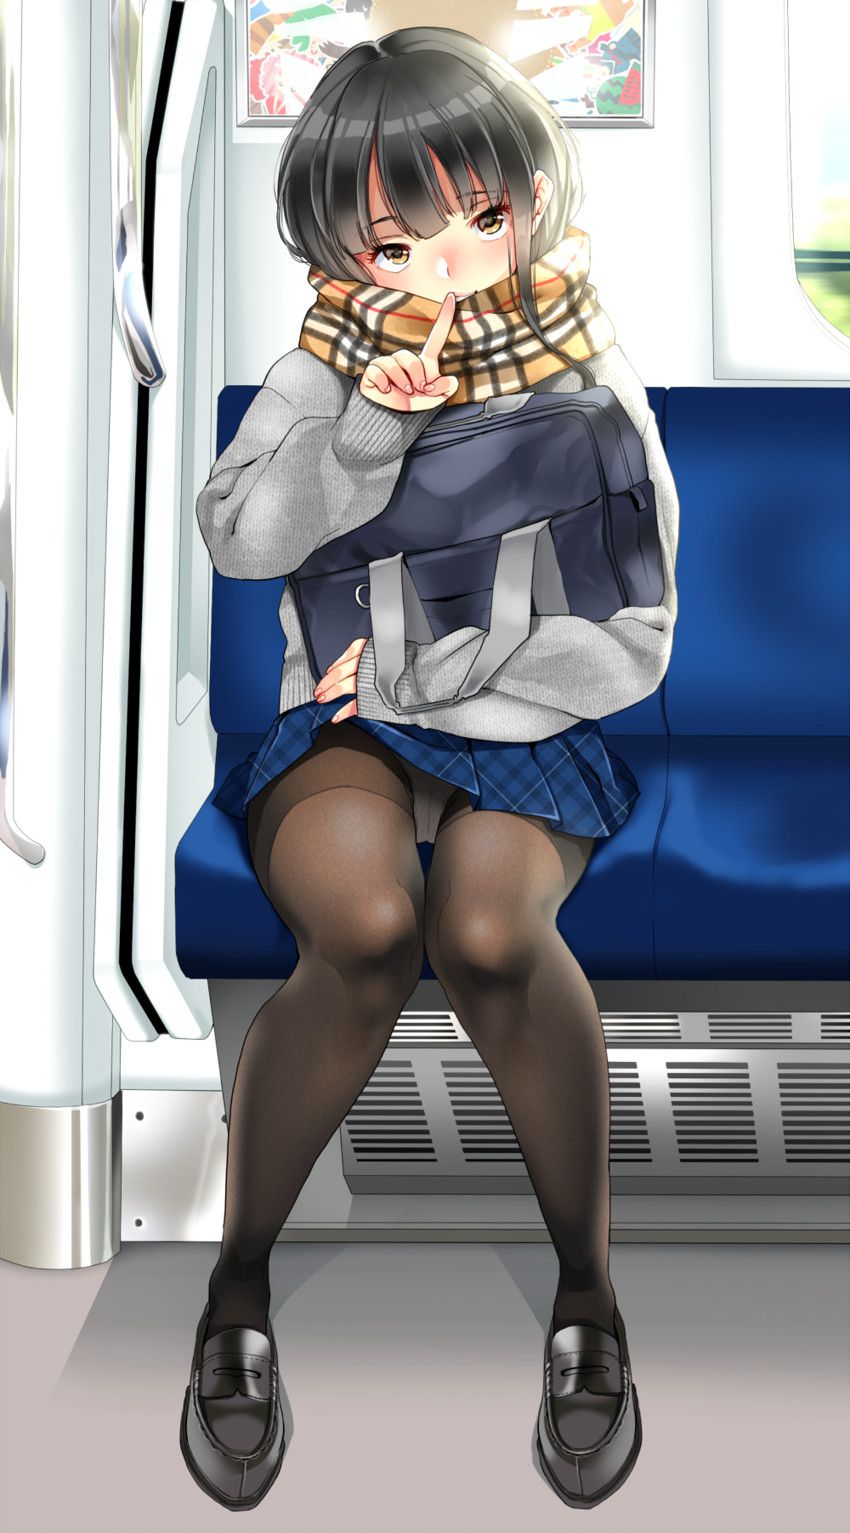 Erotic pictures of girls riding on the train, underwear, underwear, etc. 1